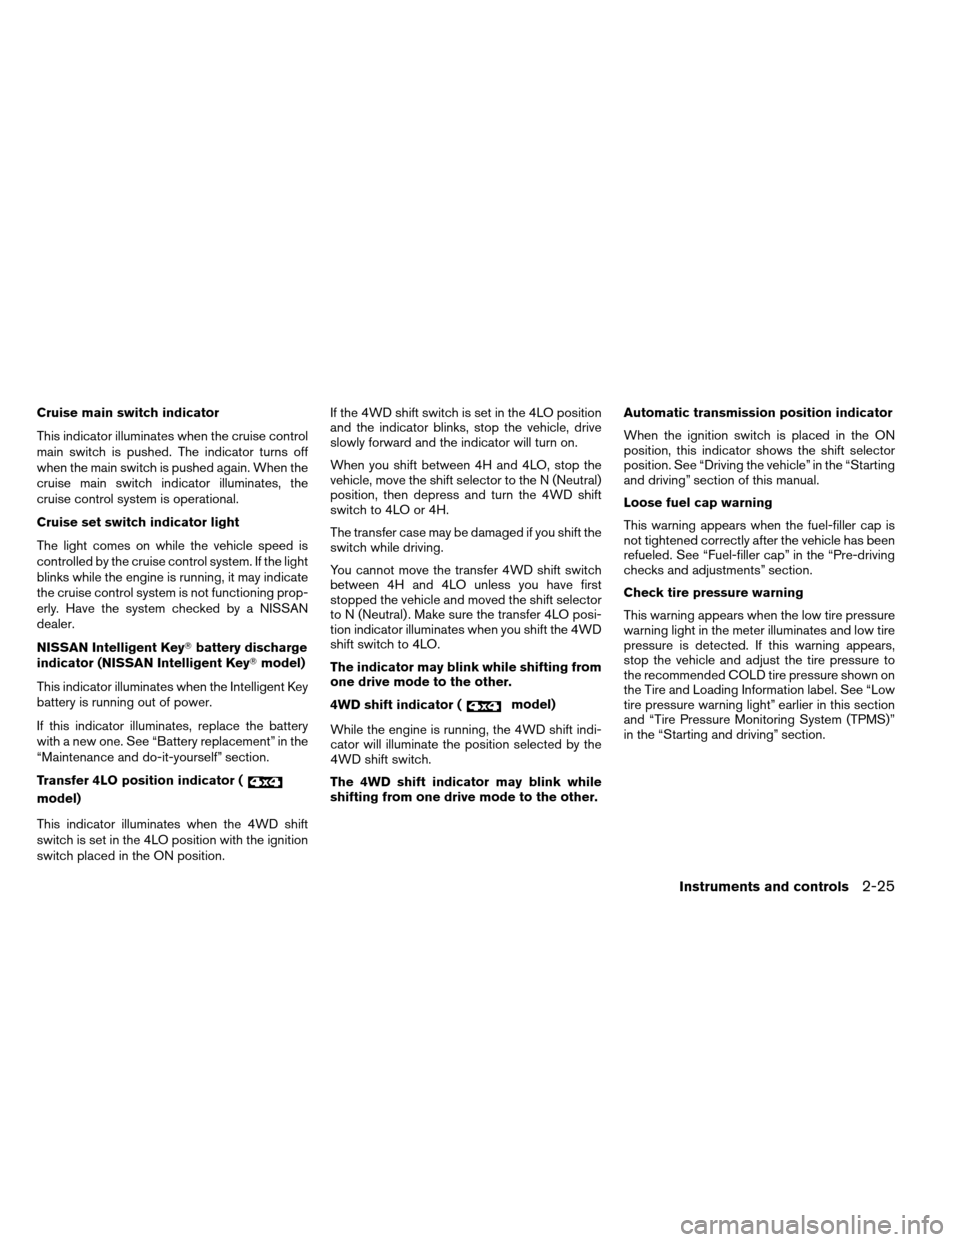 NISSAN ARMADA 2014 1.G User Guide Cruise main switch indicator
This indicator illuminates when the cruise control
main switch is pushed. The indicator turns off
when the main switch is pushed again. When the
cruise main switch indicat